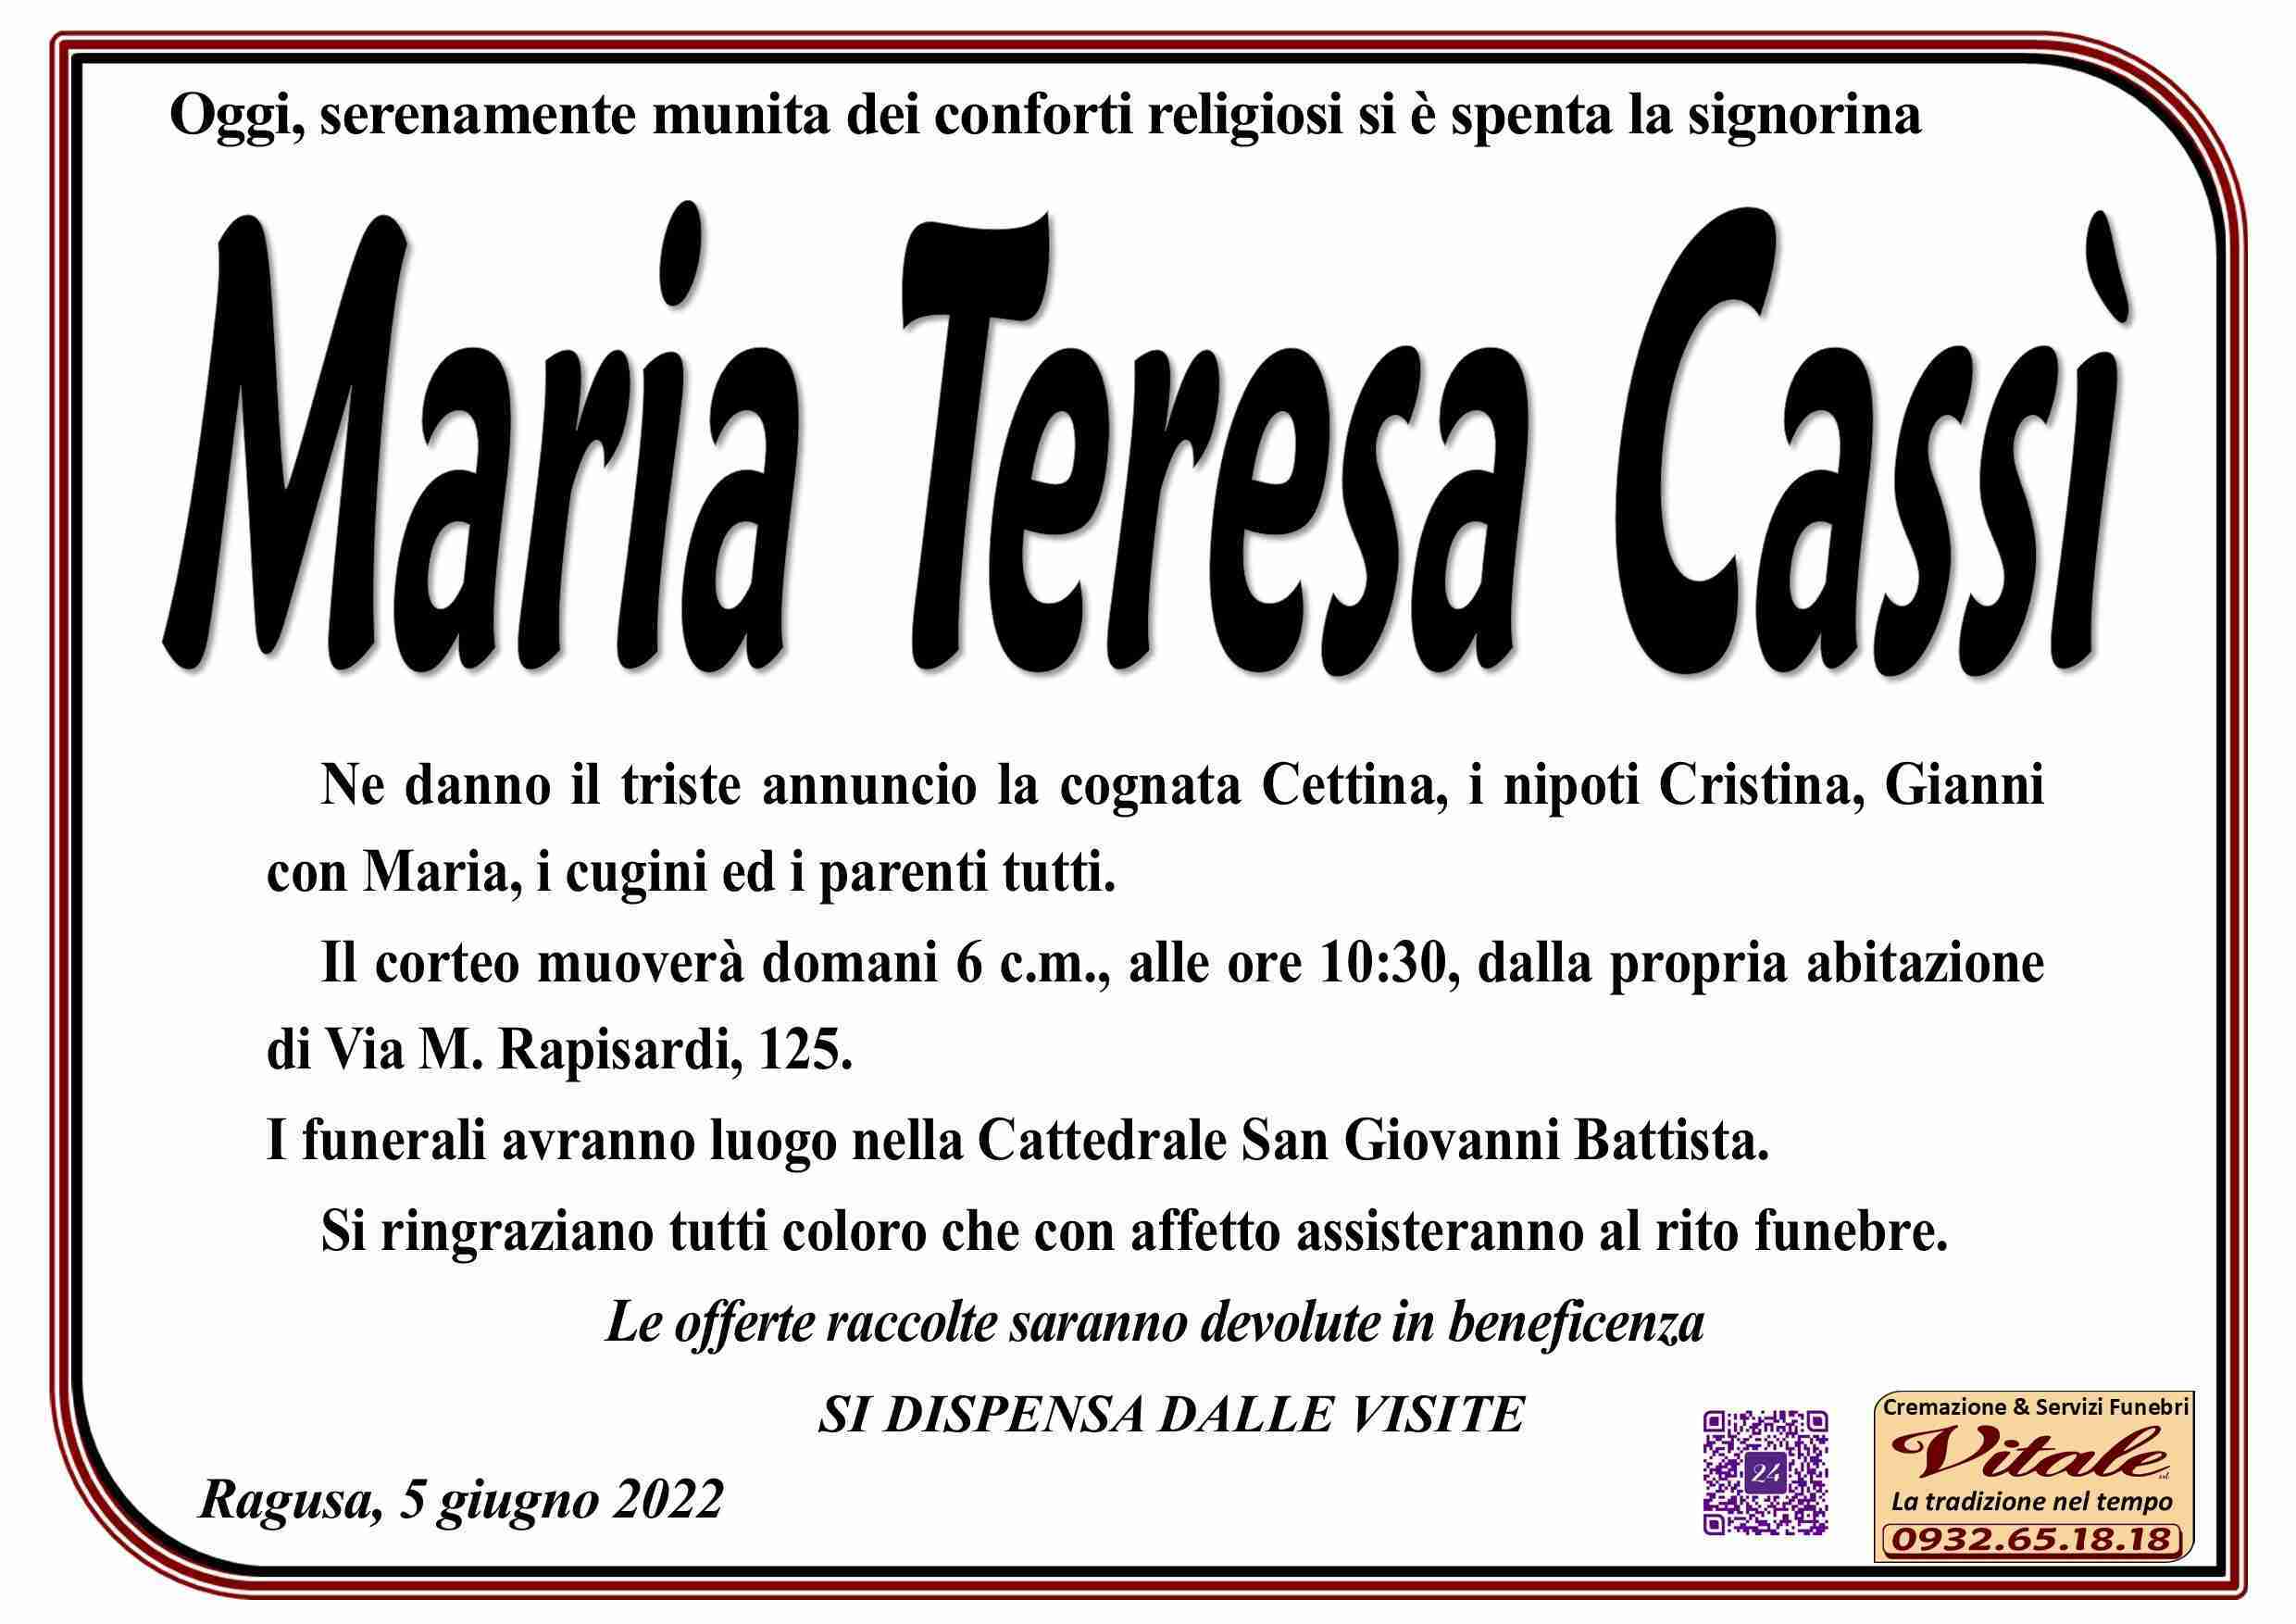 Maria Teresa Cassì